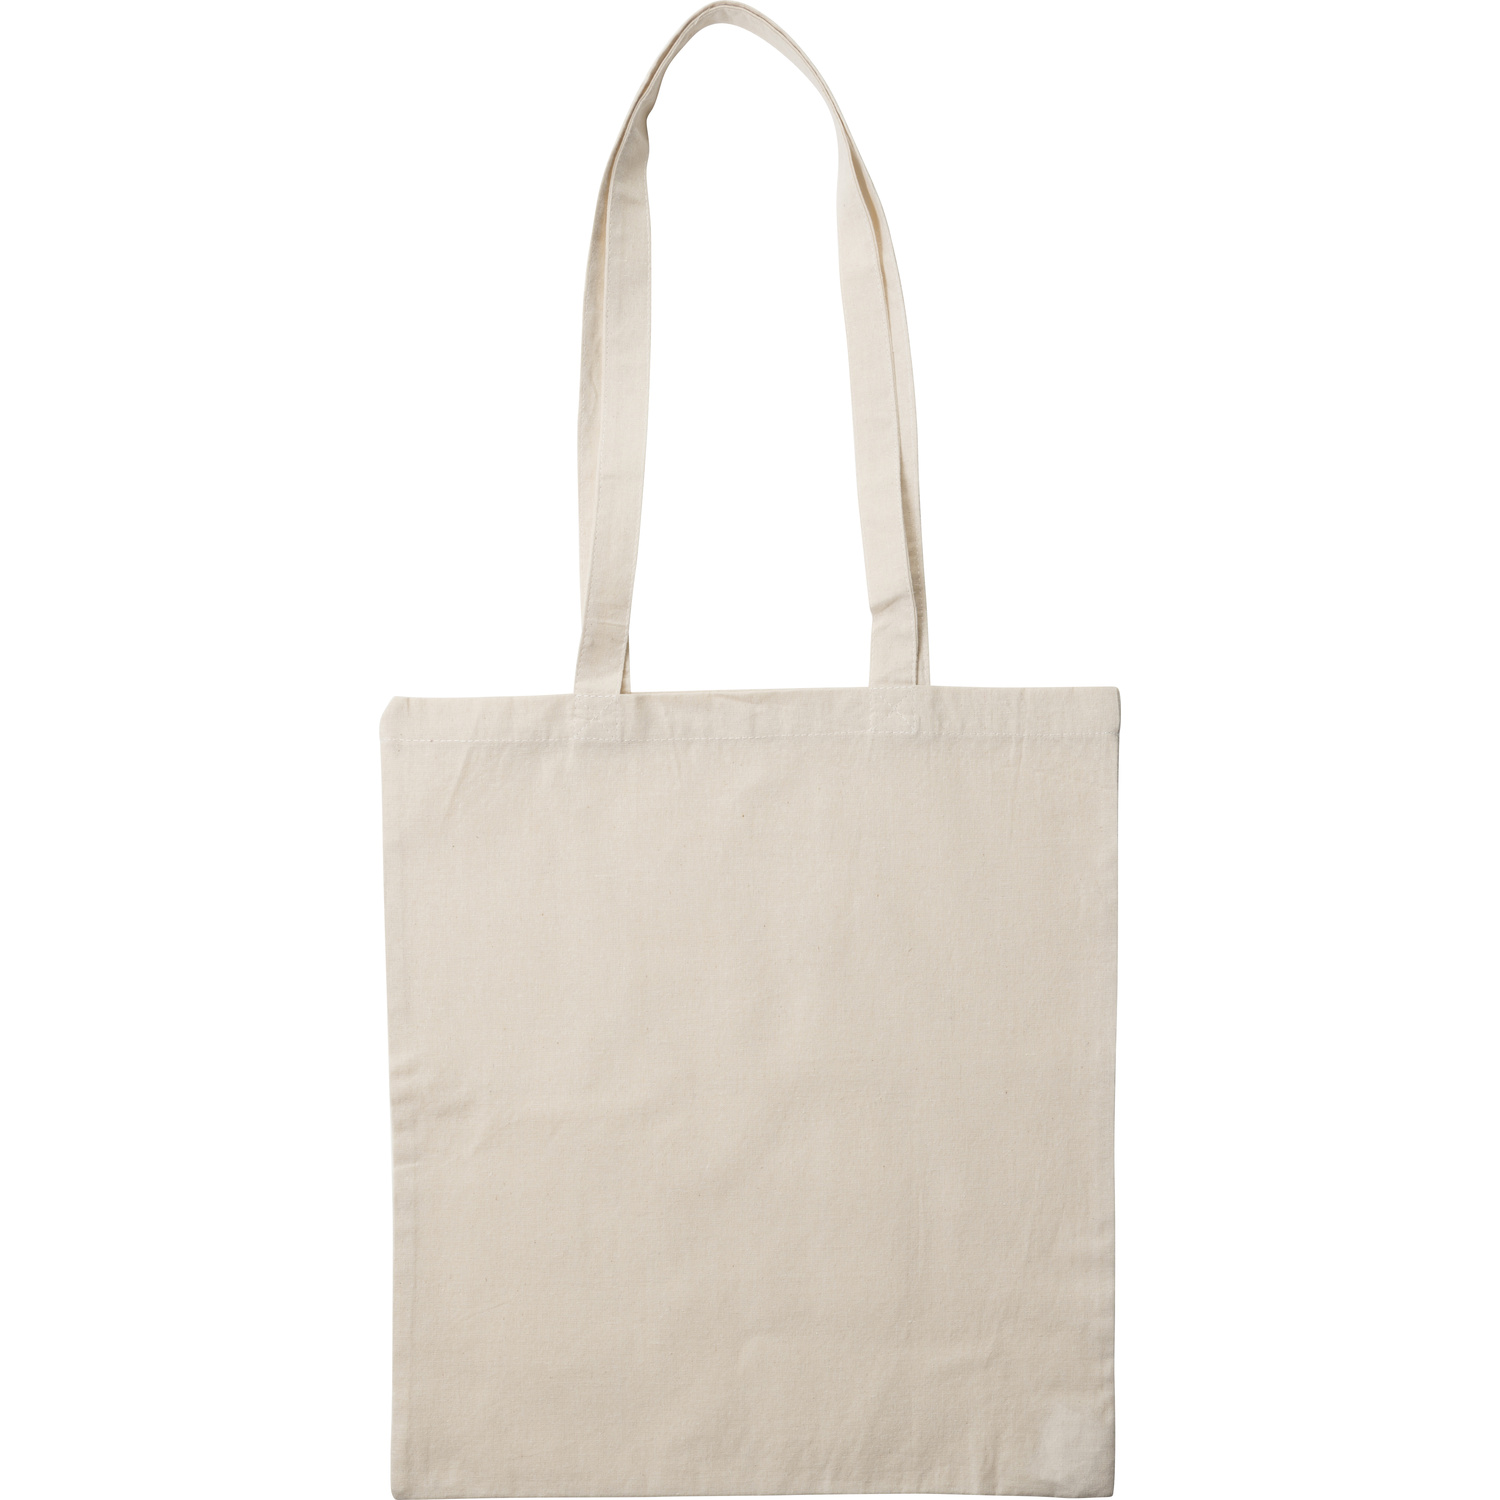 007851 013999999 2d090 frt pro01 fal - Long Handled Cotton shopping bag